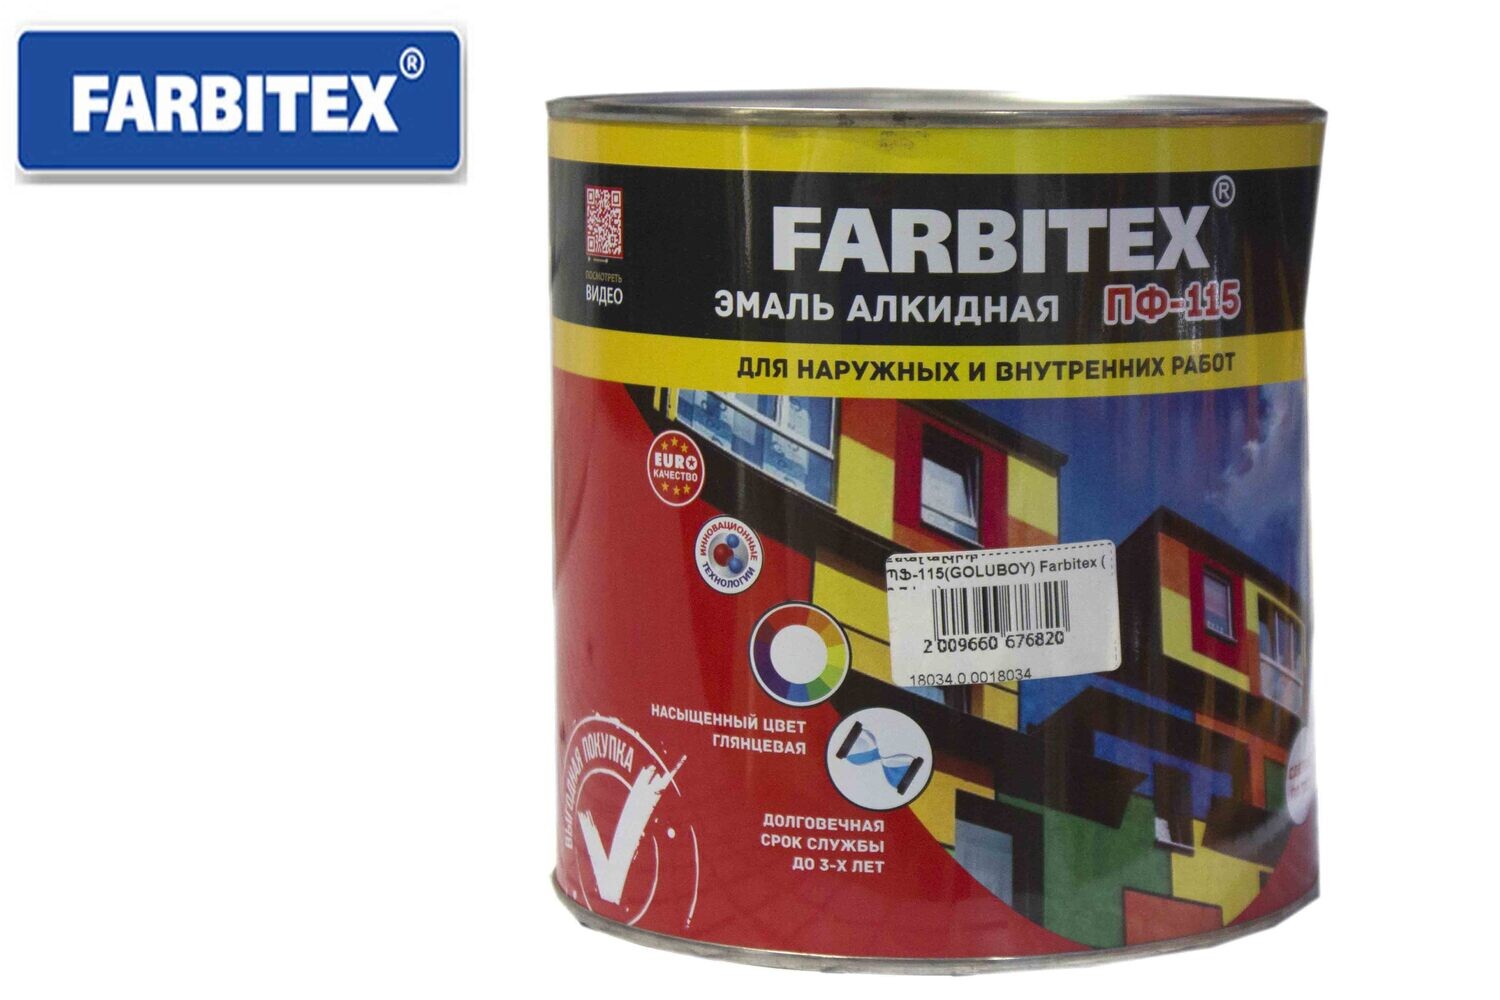 էմալ ալկիդ. ՊՖ-115(GOLUBOY) Farbitex ( 2,7 կգ.)